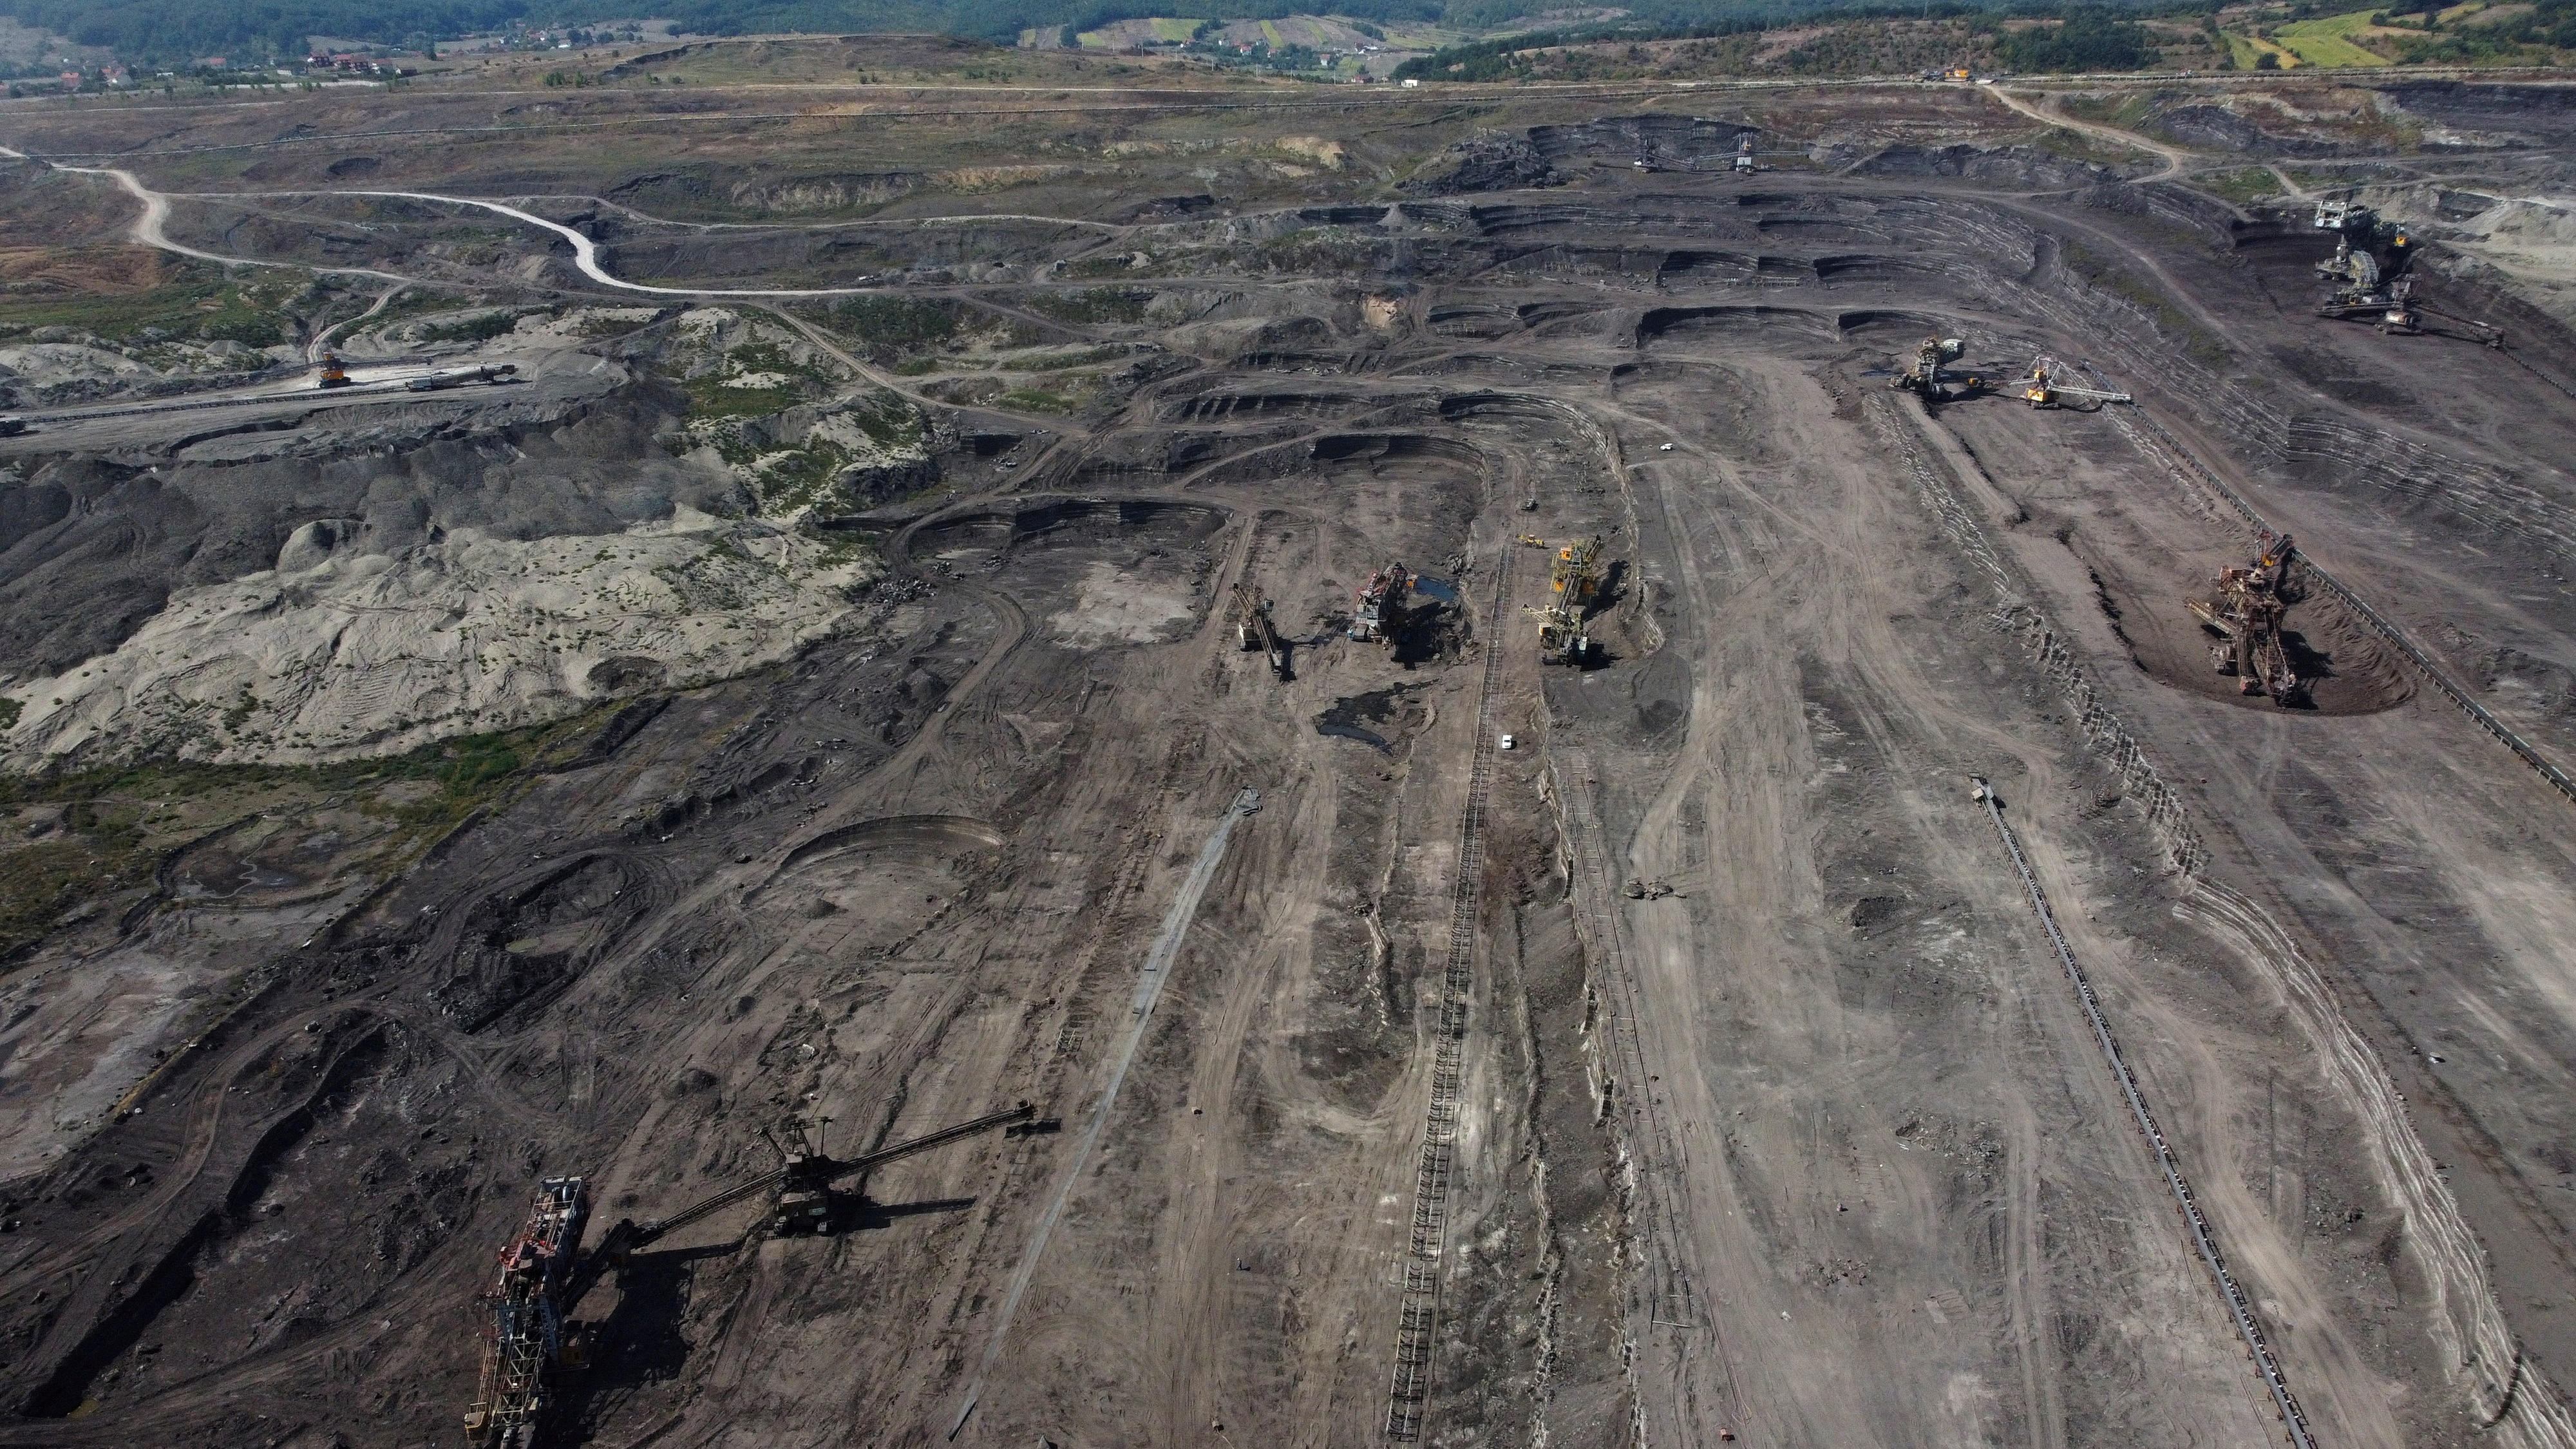 Bucket wheel excavators await the start of lignite mining from the coal mines near Obilic